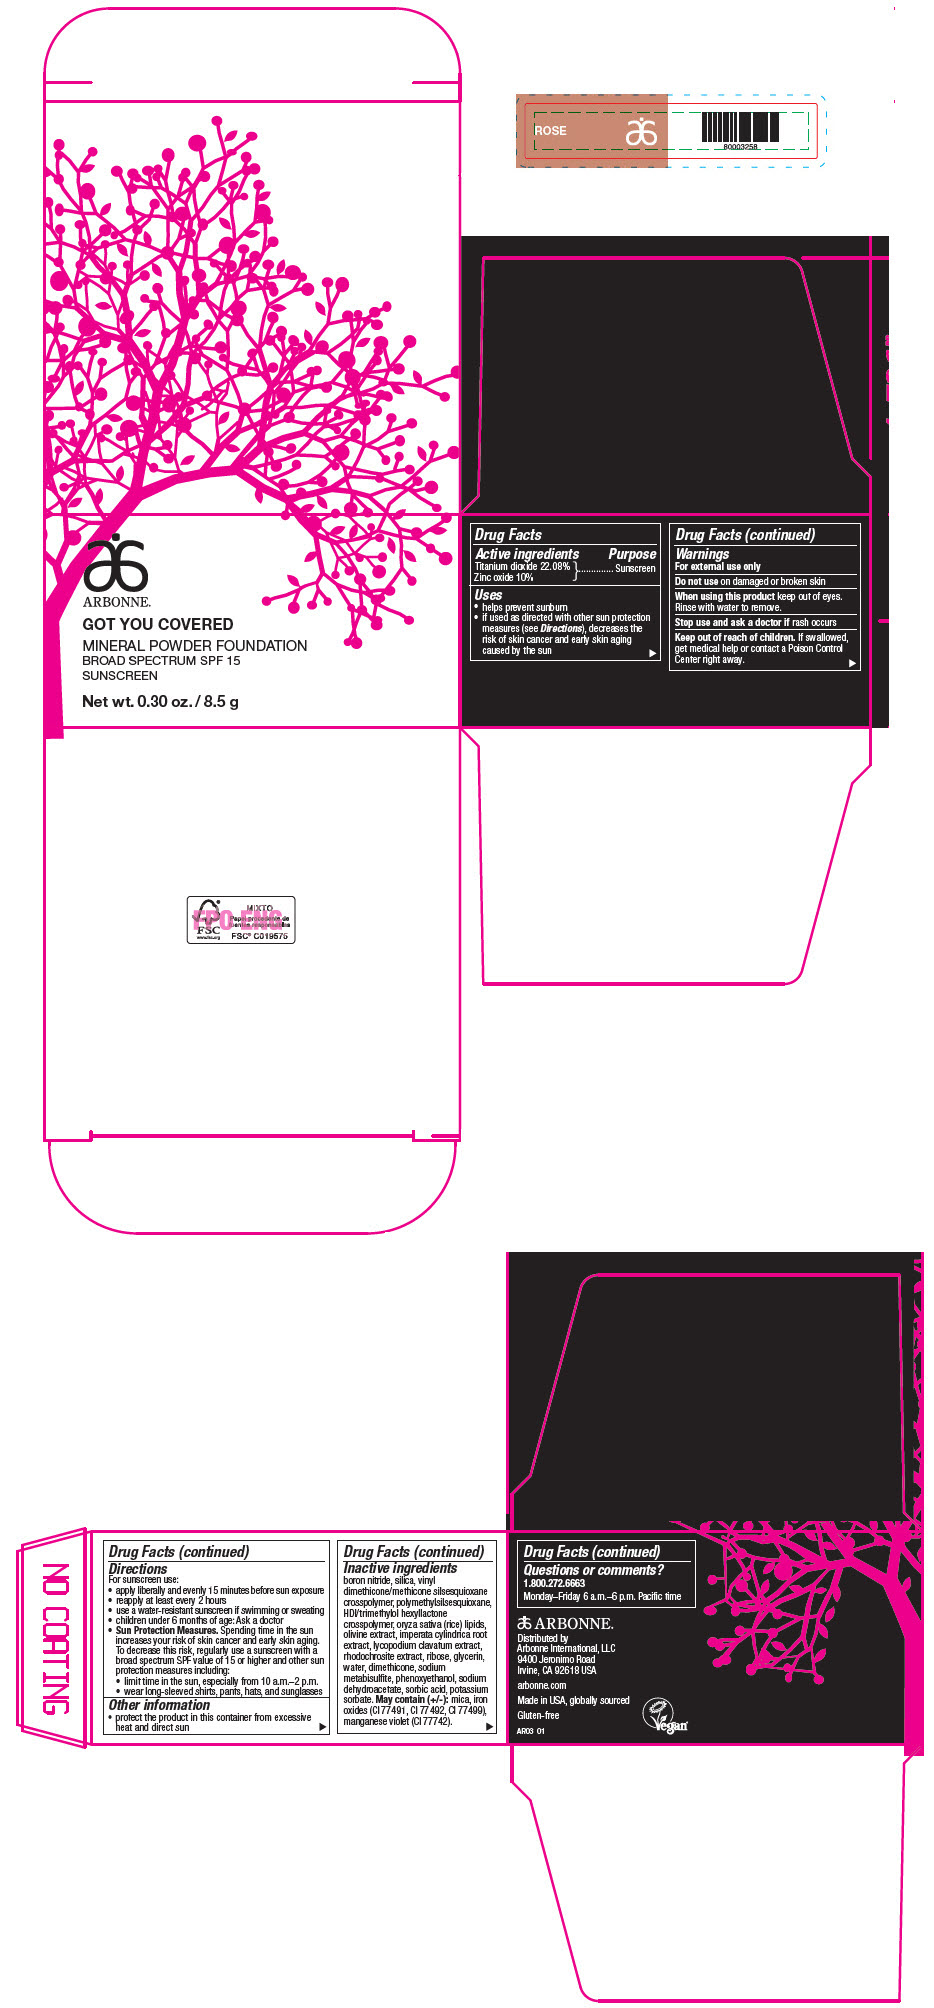 PRINCIPAL DISPLAY PANEL - 8.5 g Jar Carton - ROSE